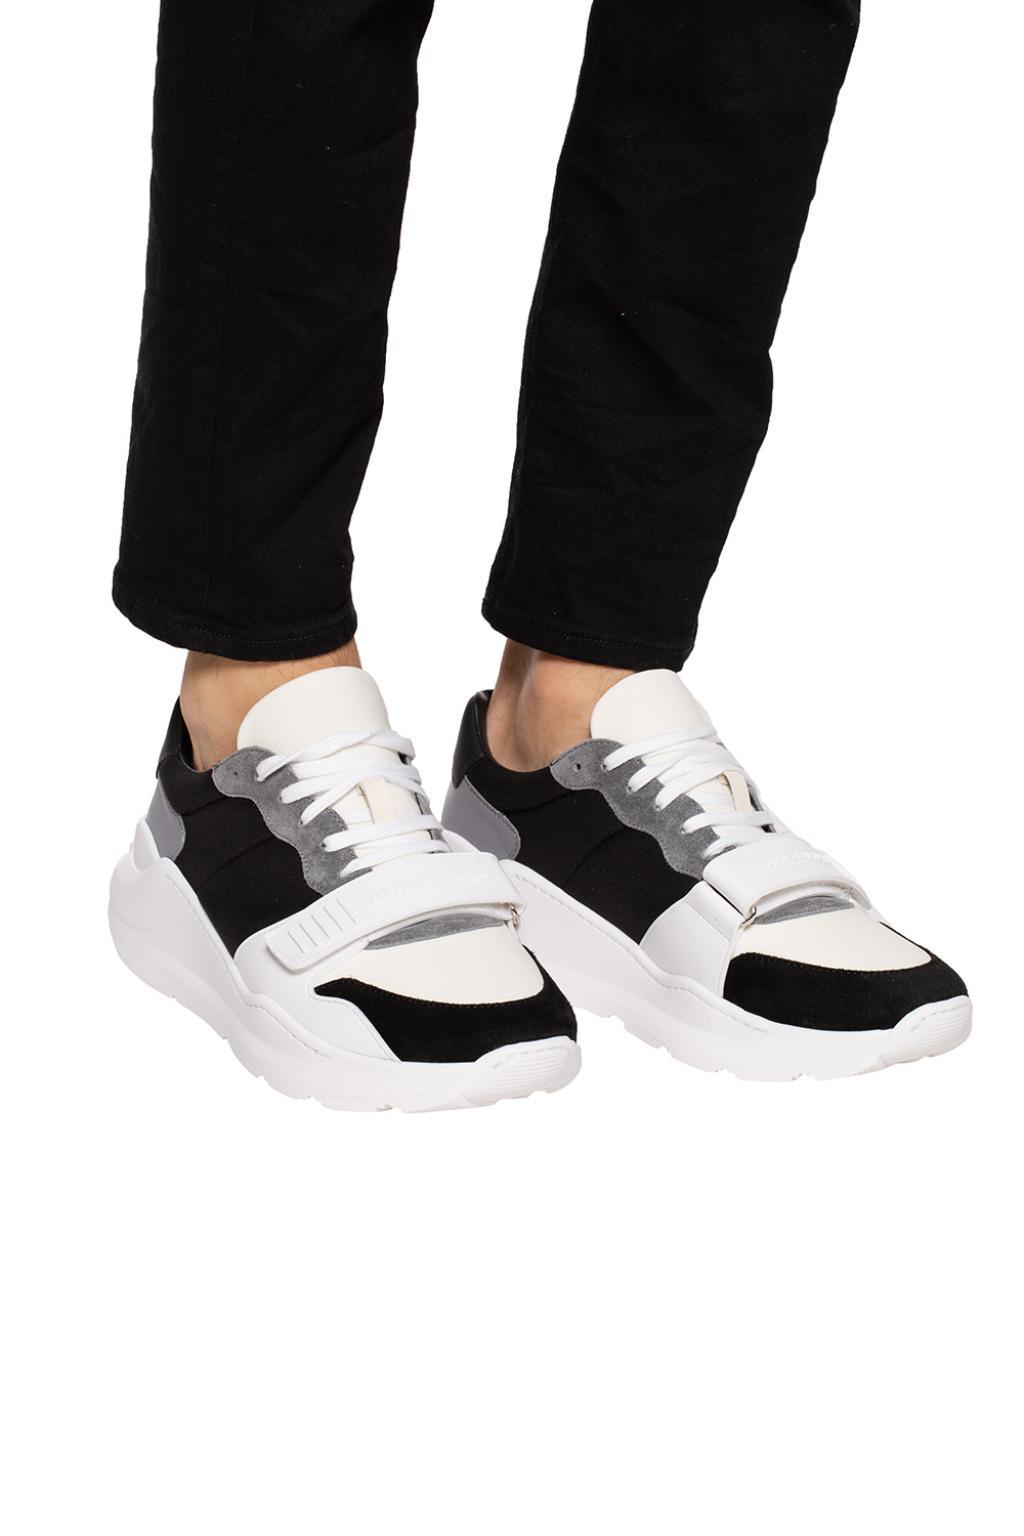 Burberry Men's Regis Neoprene & Leather Low - Top Sneakers in White/Black  (Black) for Men - Lyst